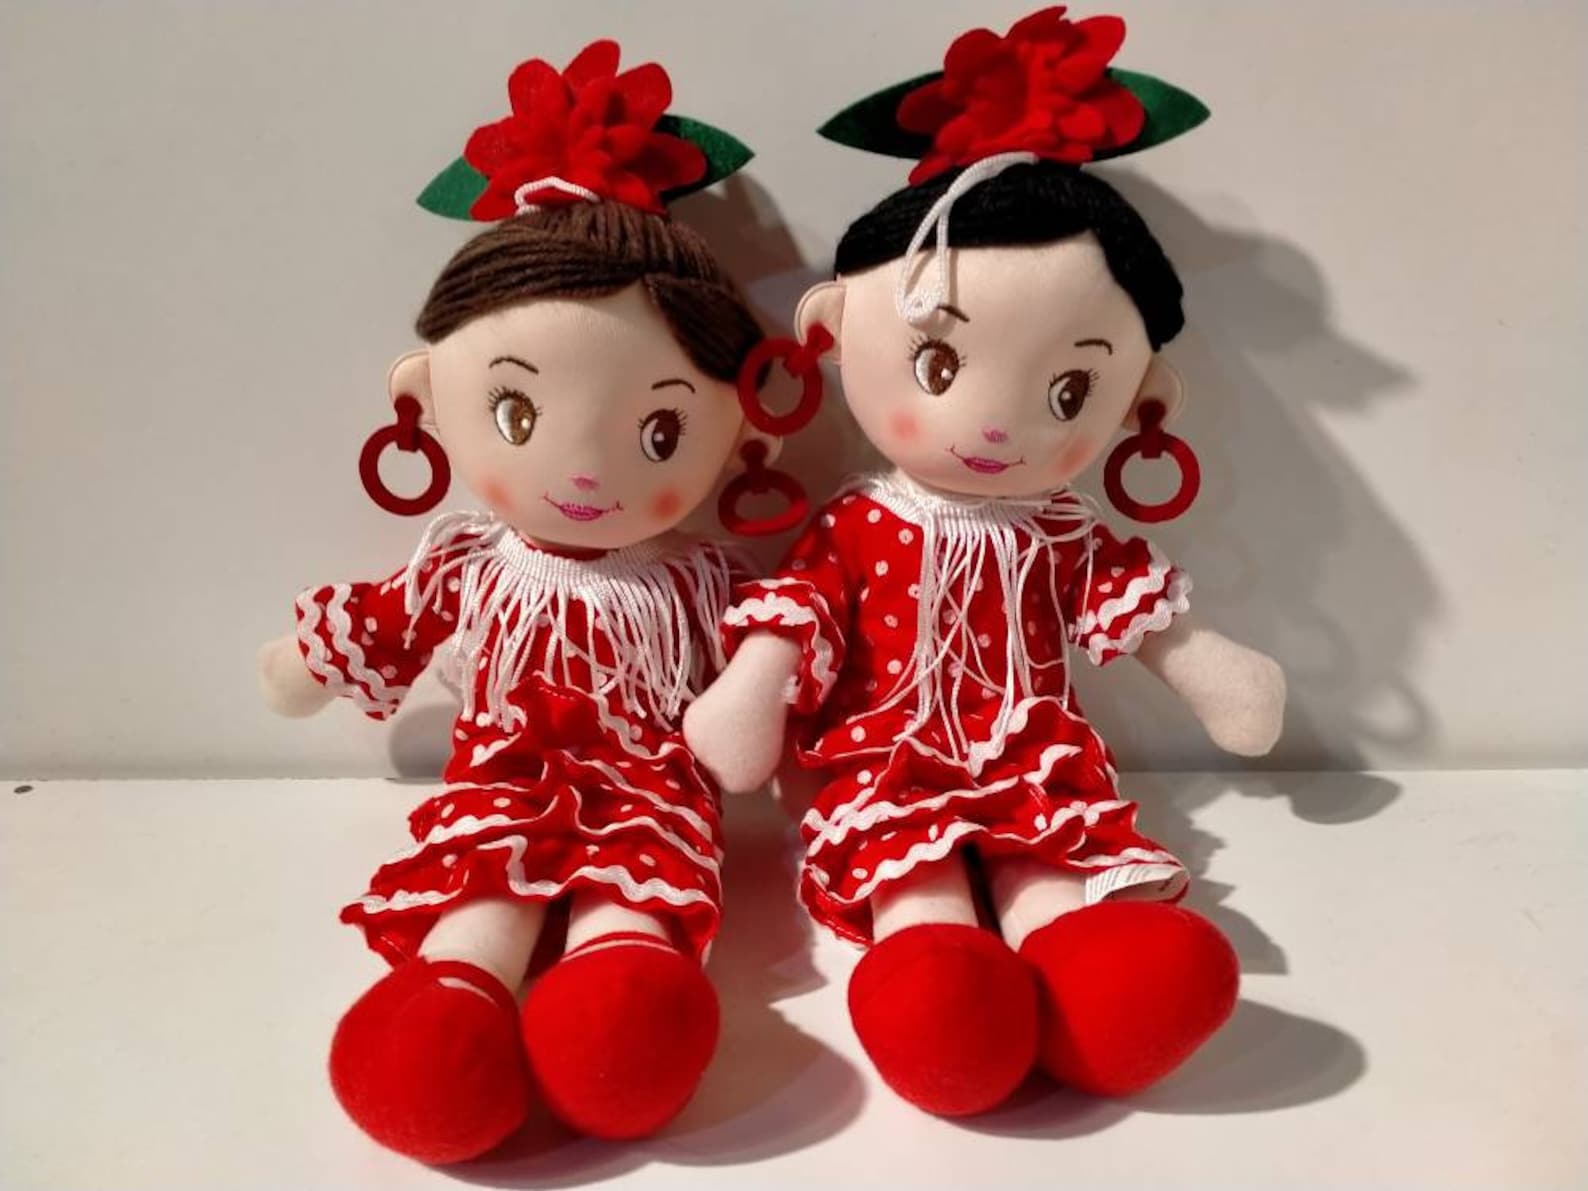 Abuelita baby dolls doll spanish speaking multicultural dvds teach hispanic traditional children books series used